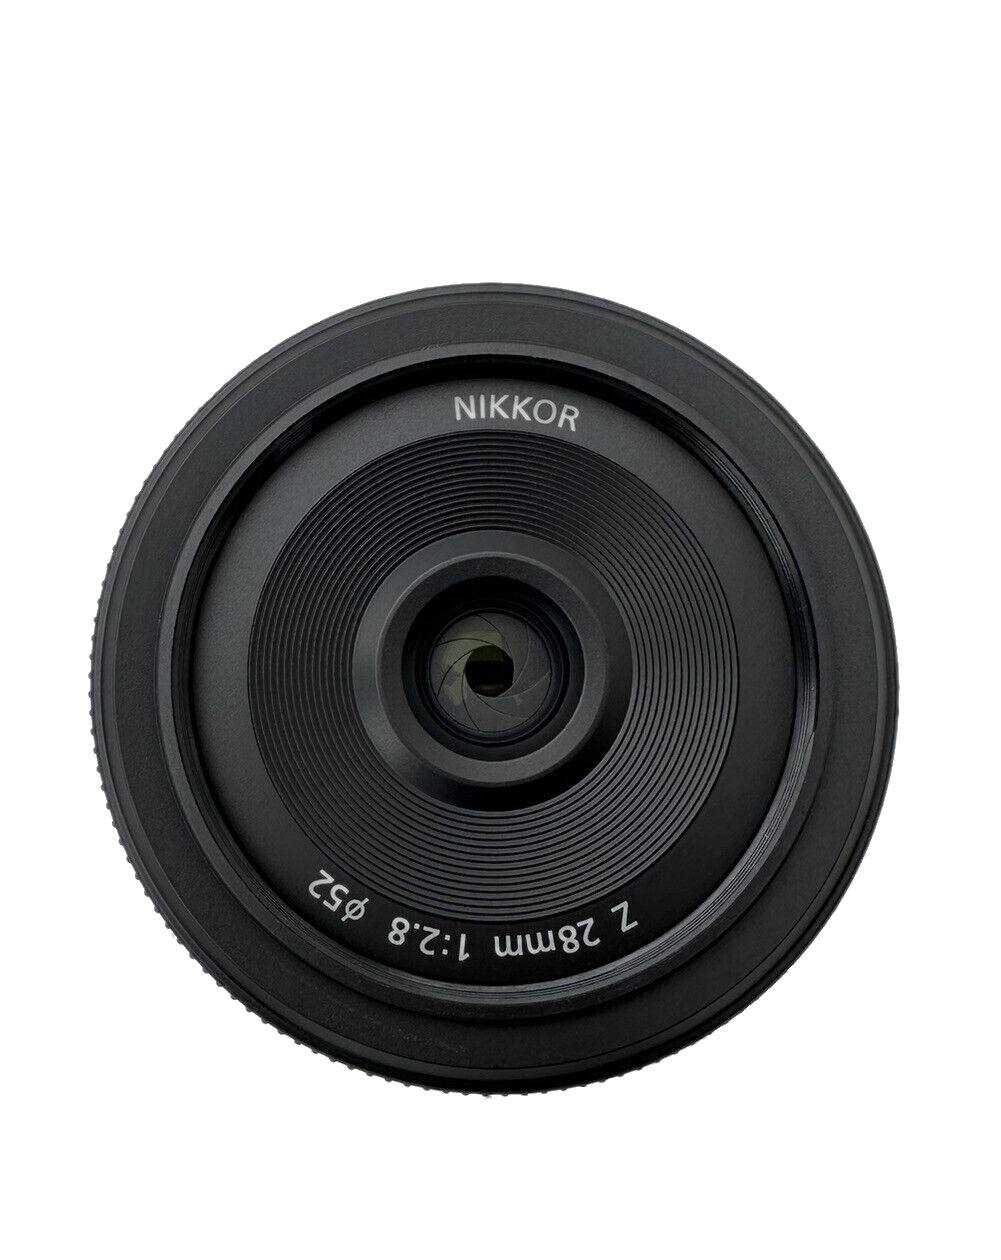 Nikon NIKKOR Z 28mm f2.8 SE Lens